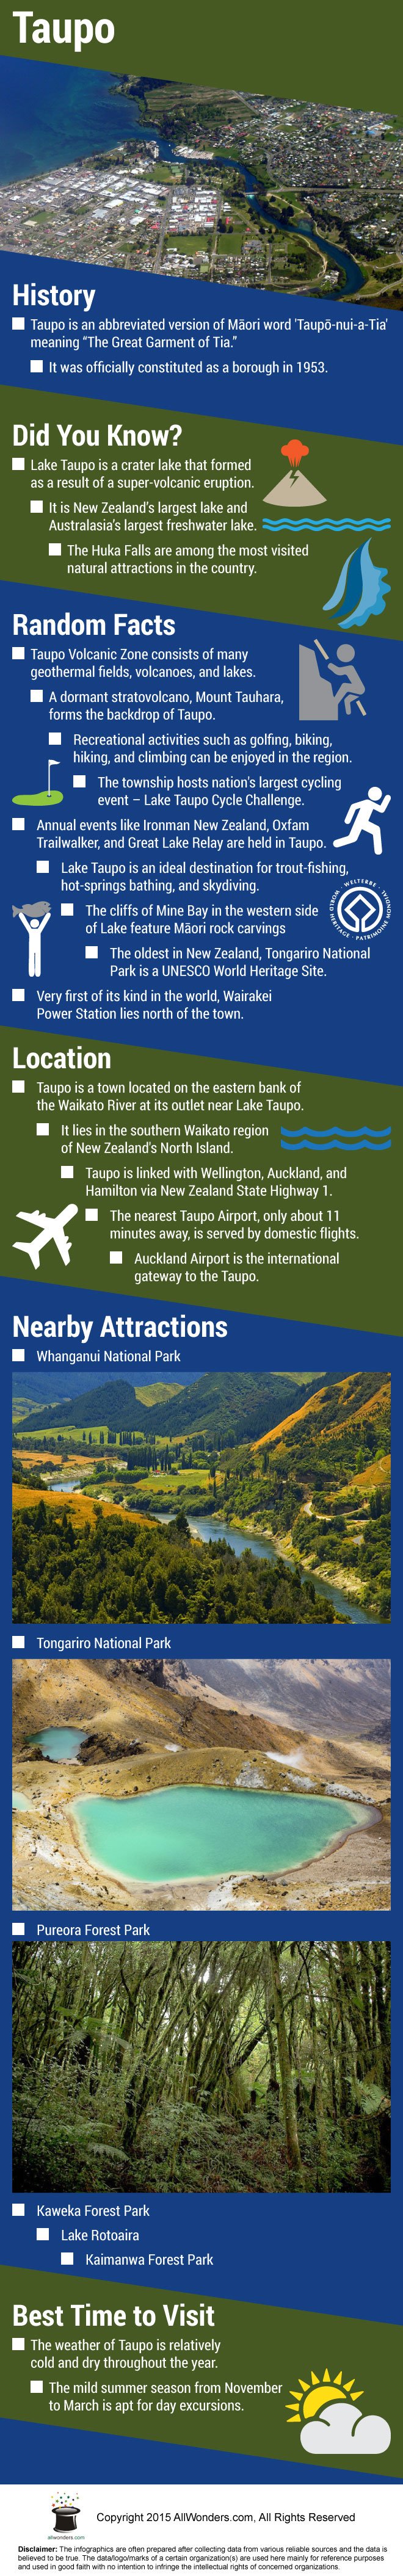 Taupo Infographic